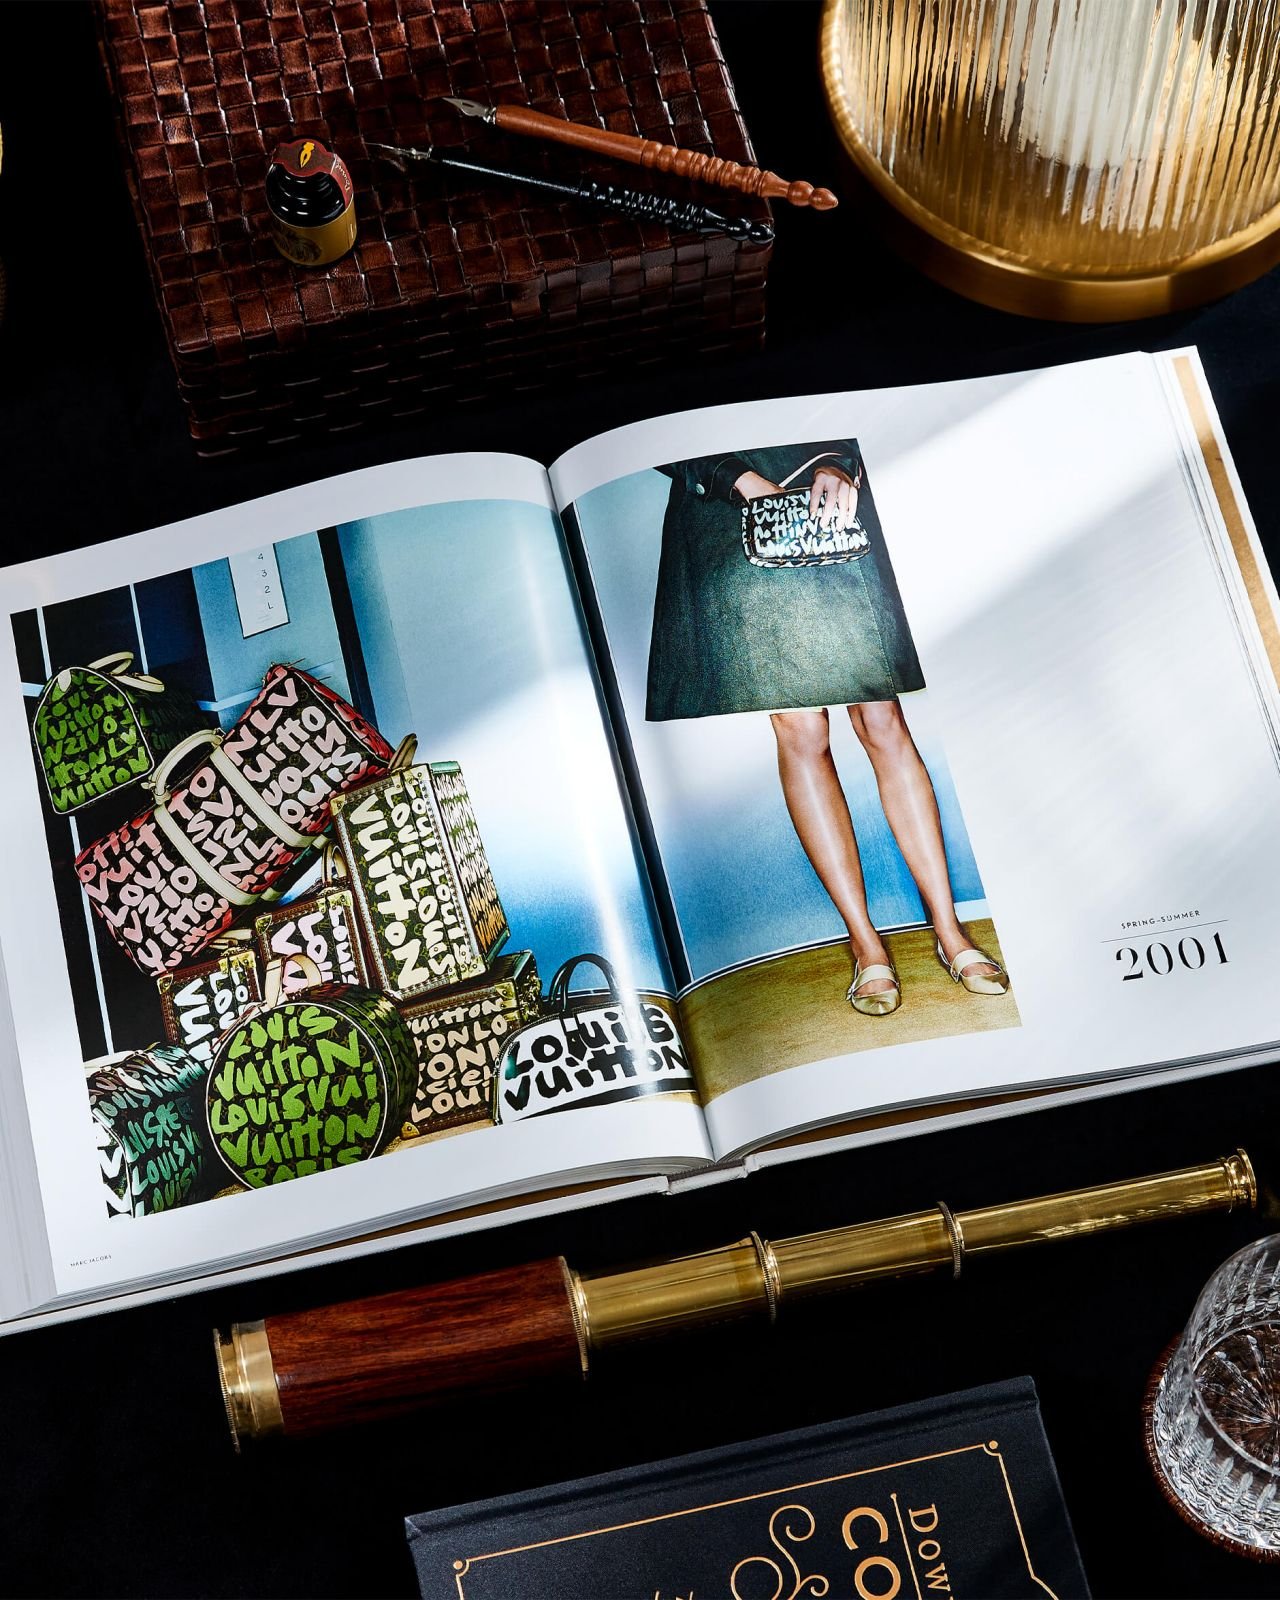 Louis Vuitton / Marc Jacobs Book: By Pamela Golbin